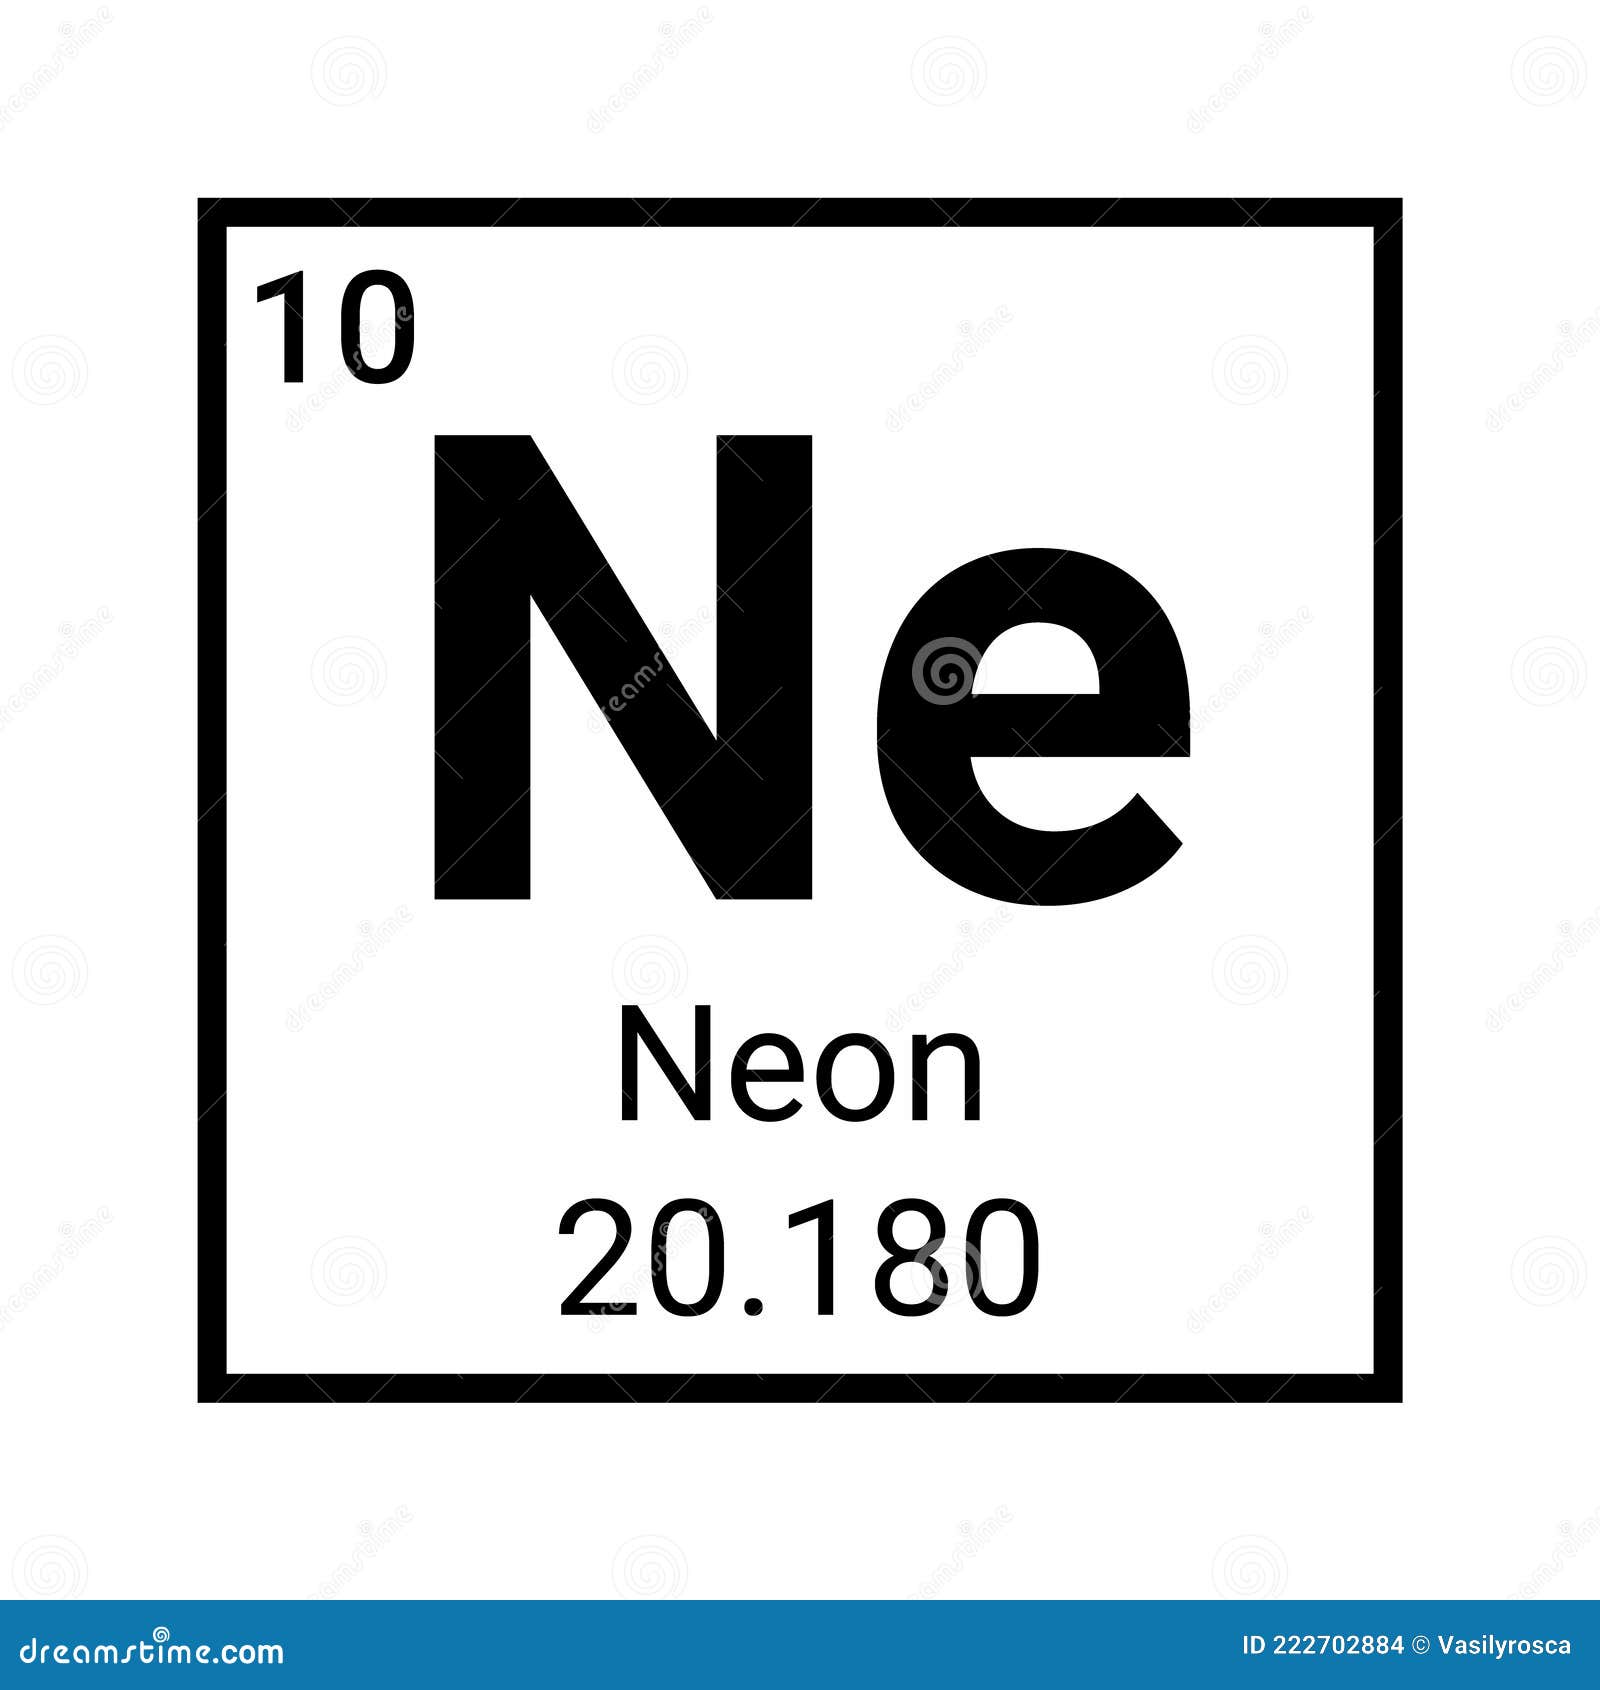 Neon Element Periodic Table Atomic Symbol Neon Chemistry Atom Science